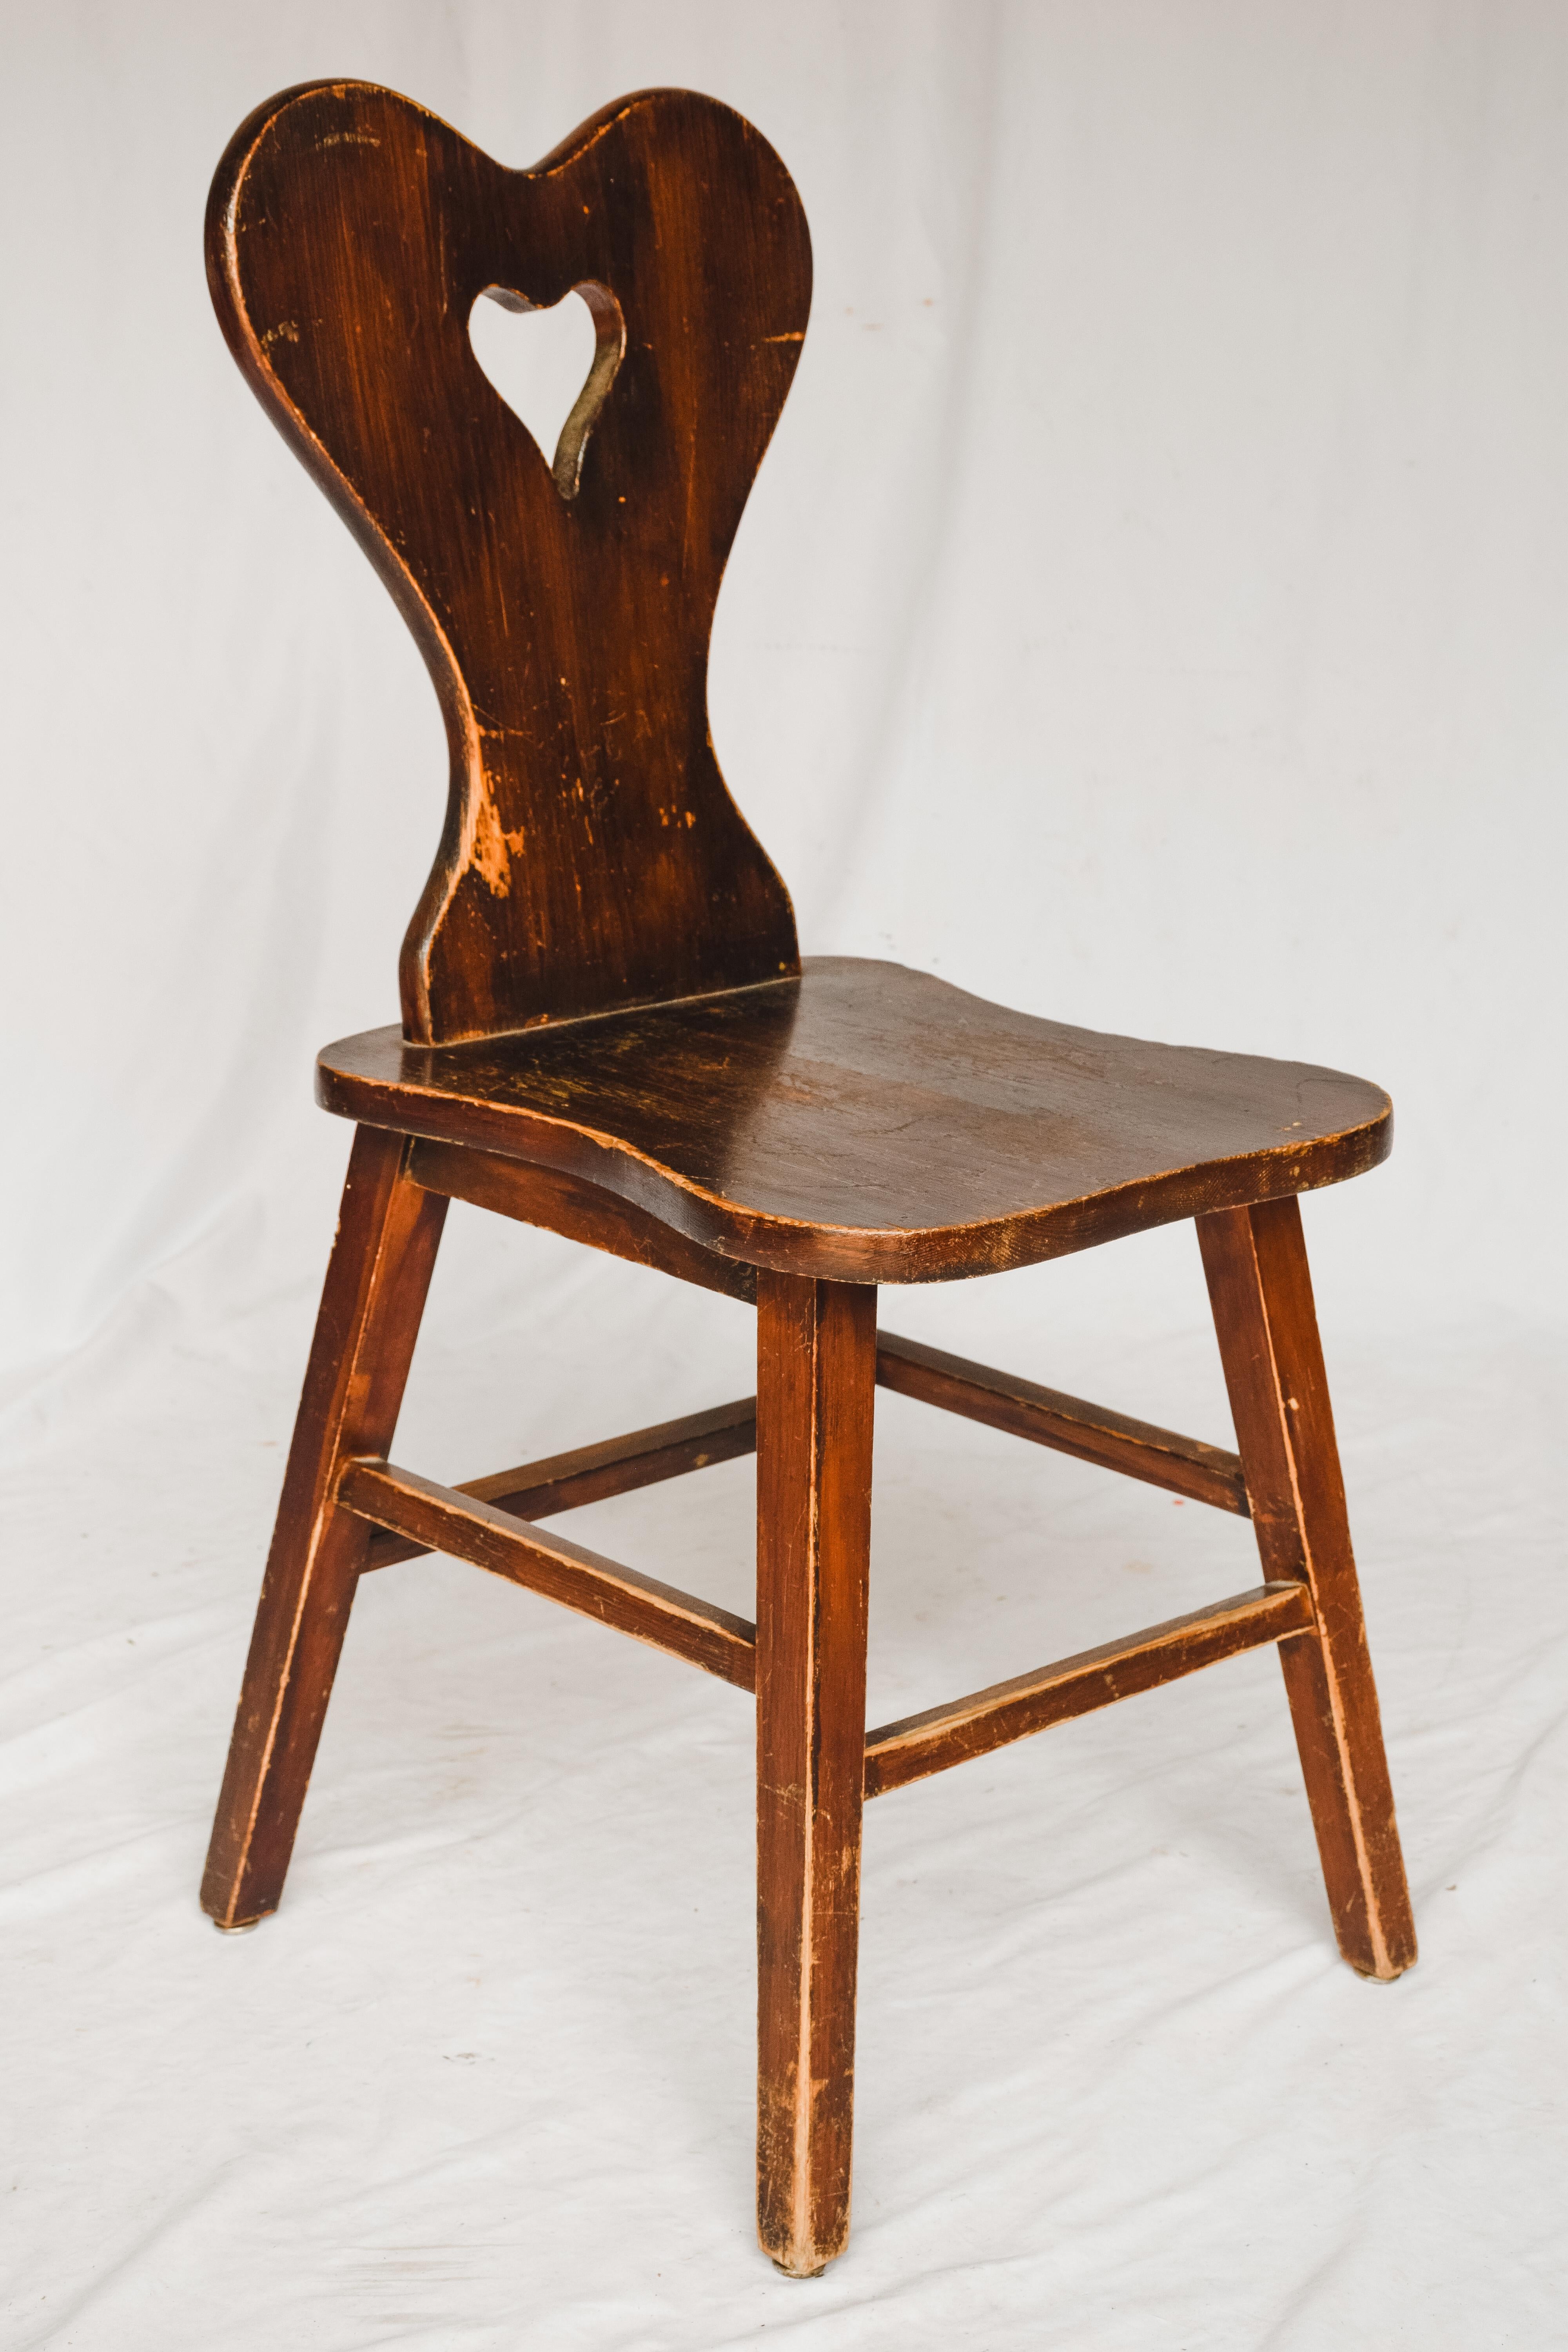 Wooden Heart Shaped Chair 2